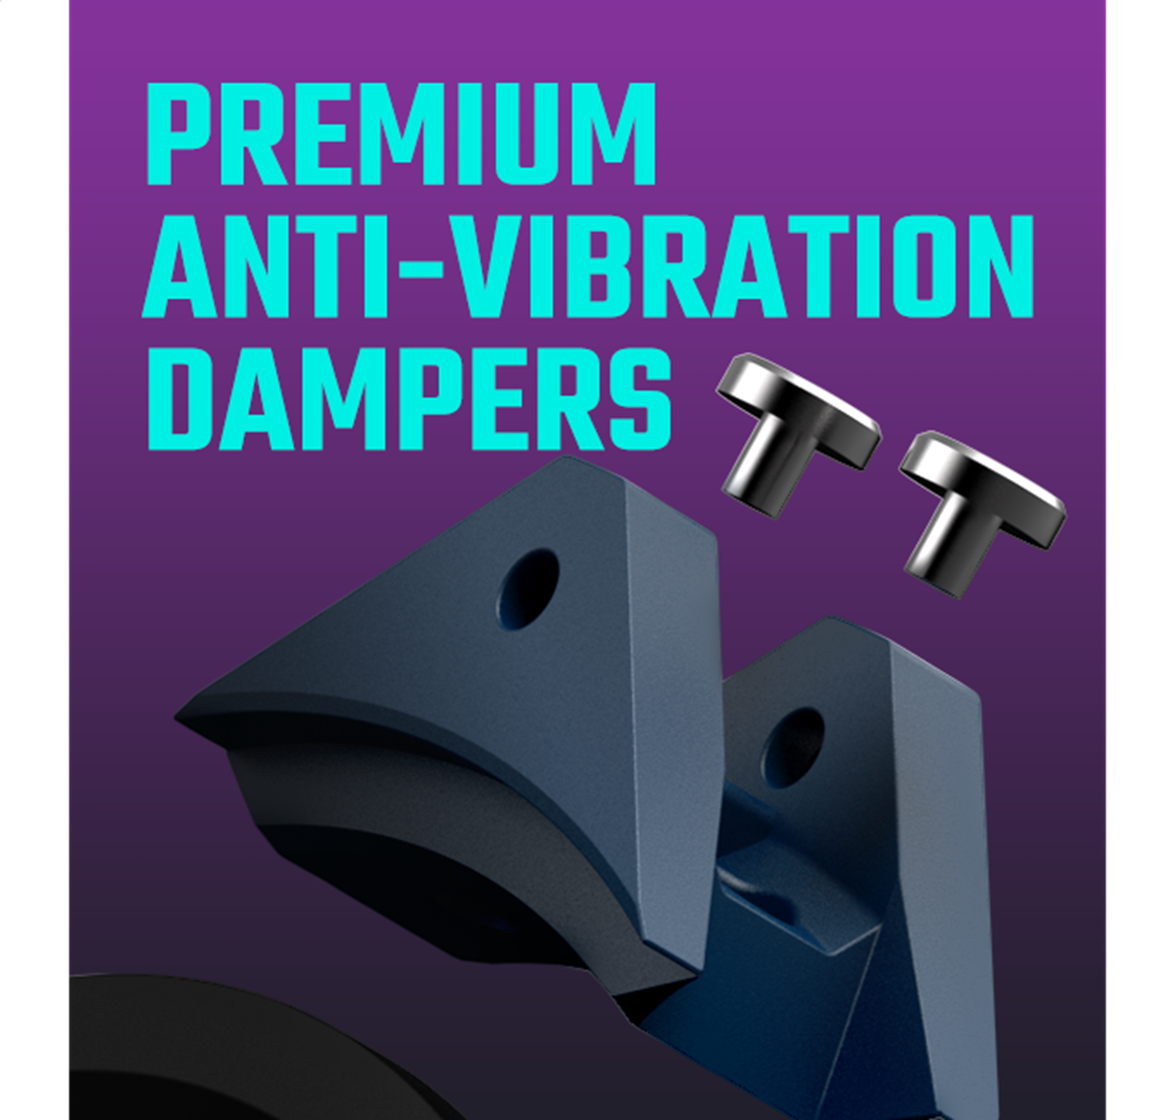 Premium Anti-vibration Dampers